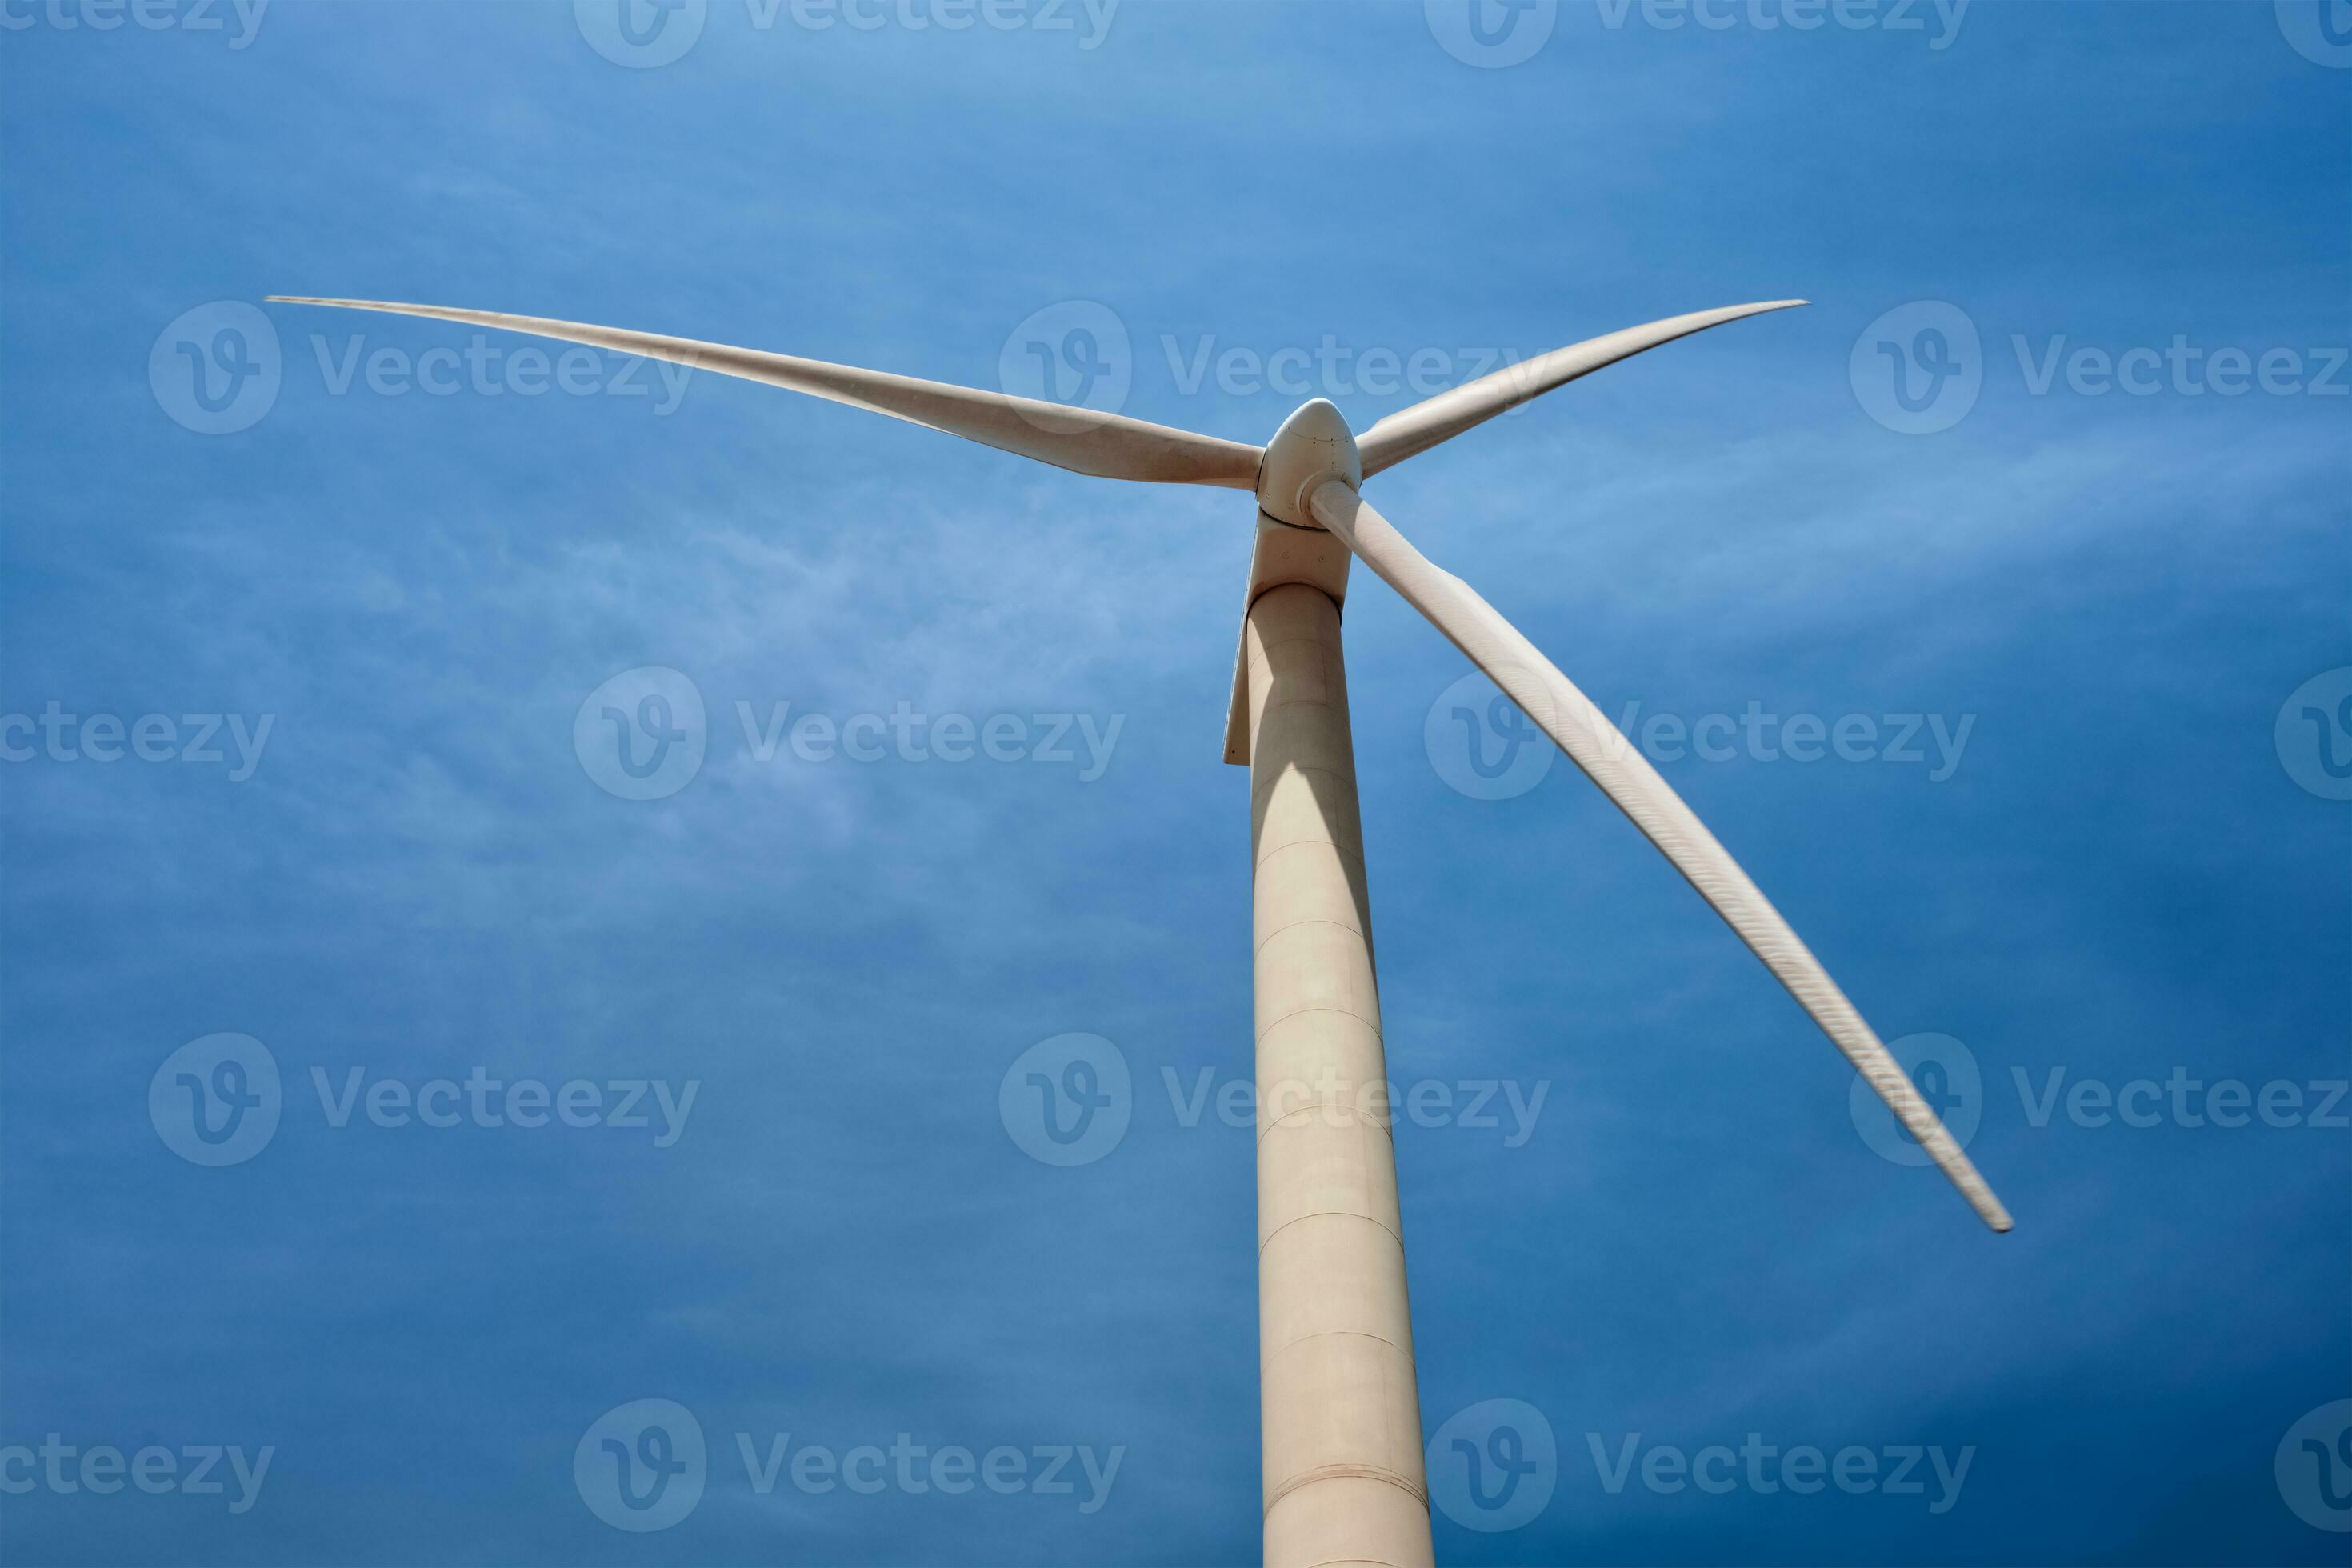 Wind generator turbine in sky 34968523 Stock Photo at Vecteezy